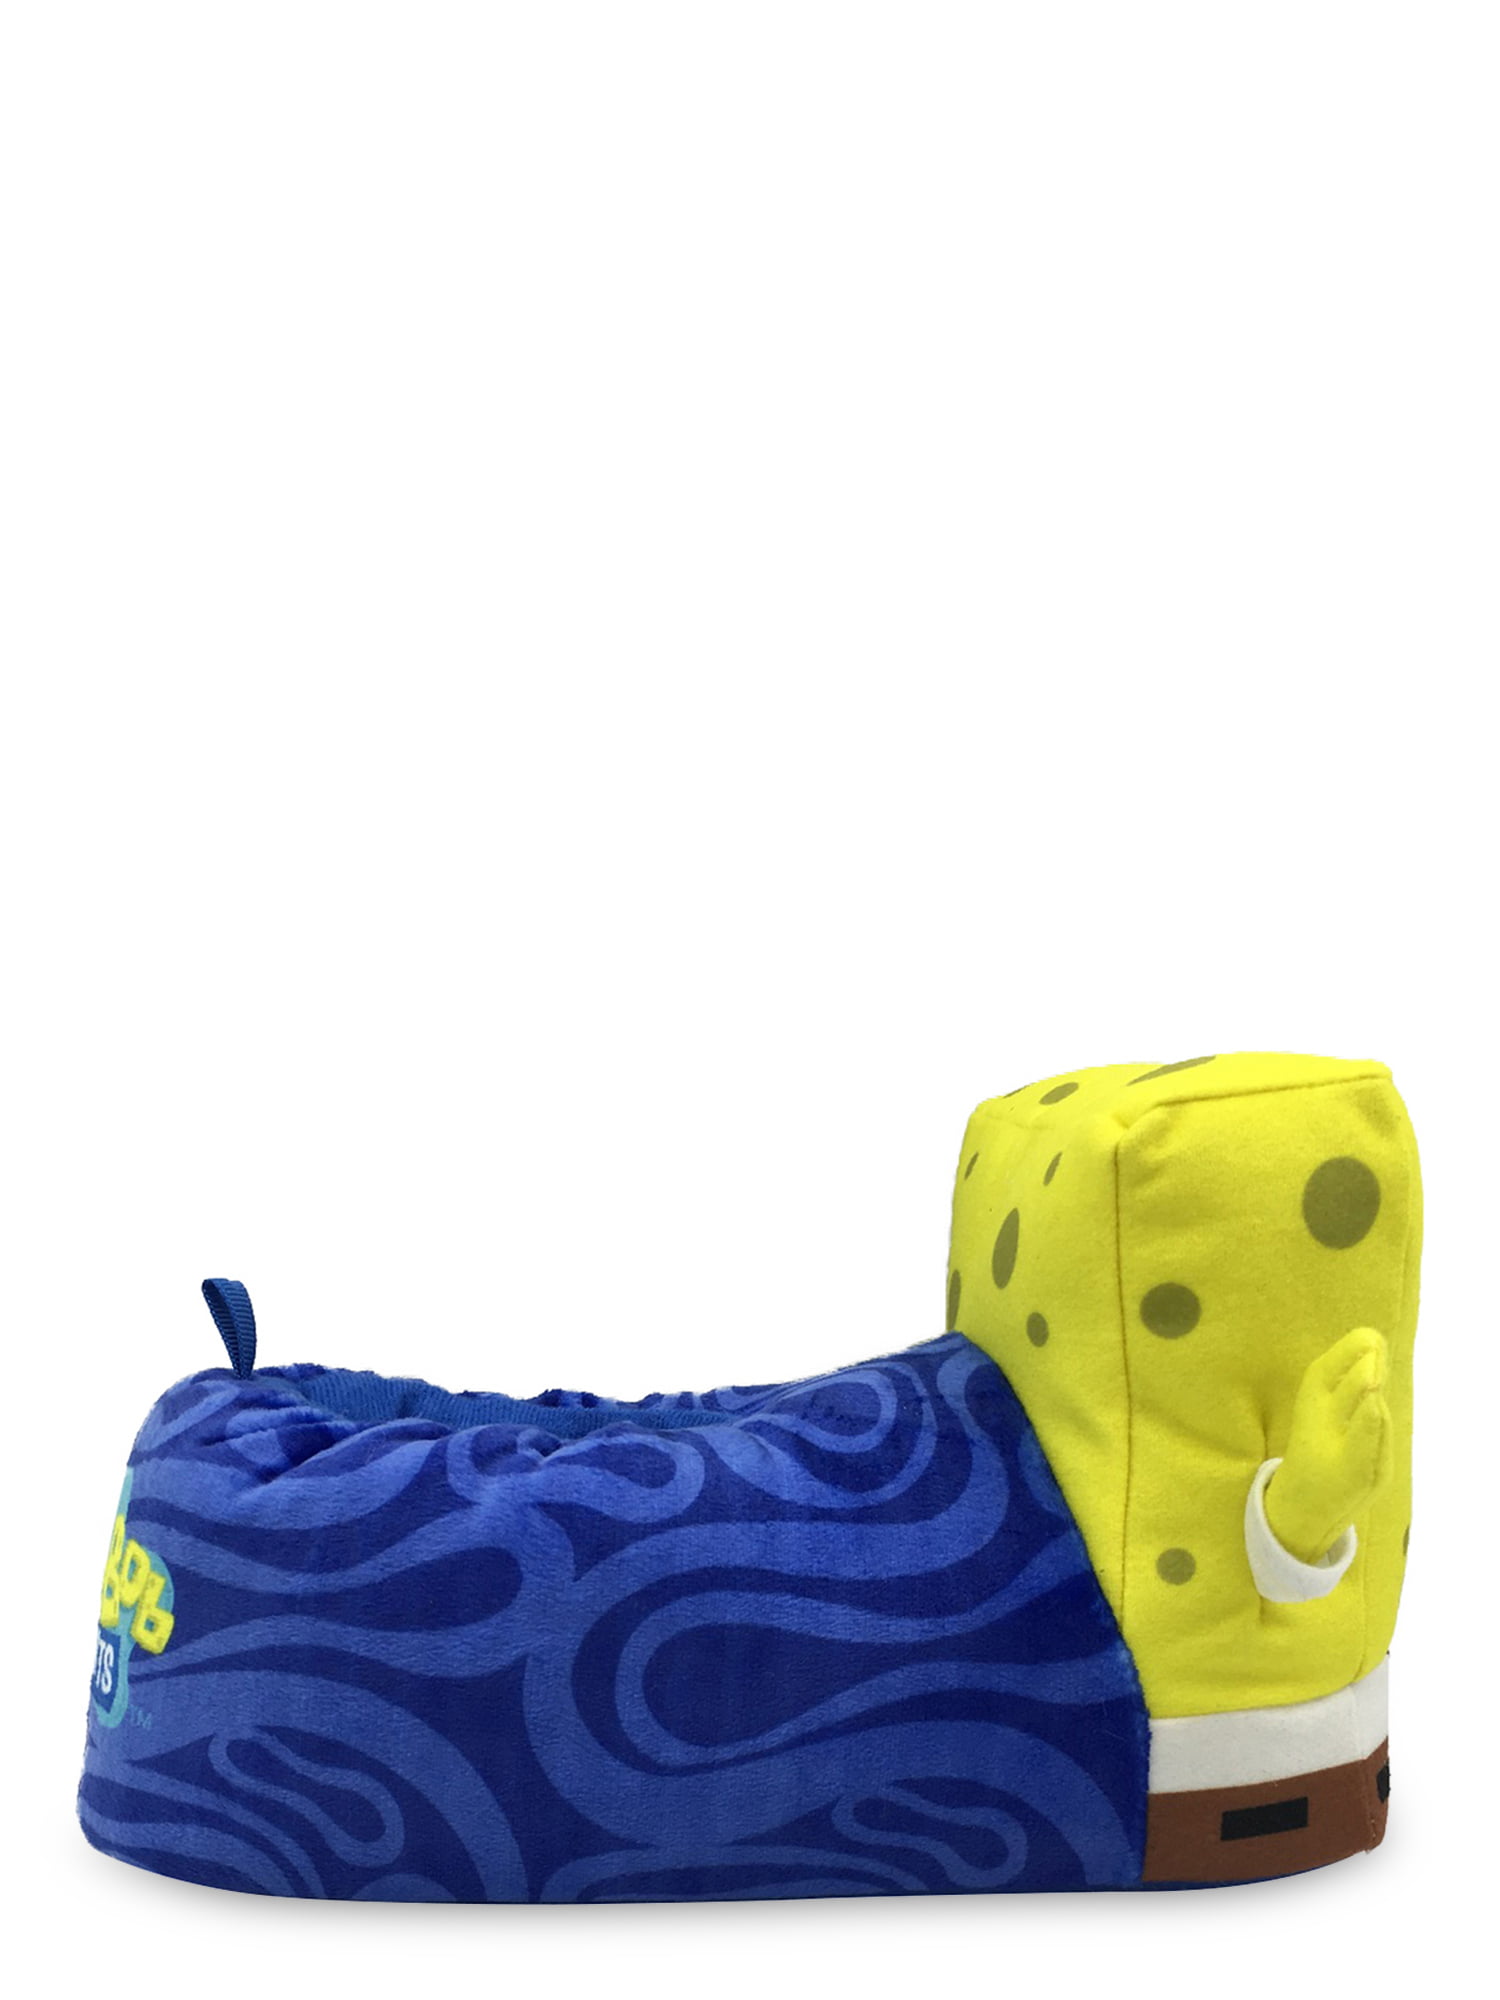 spongebob kids slippers